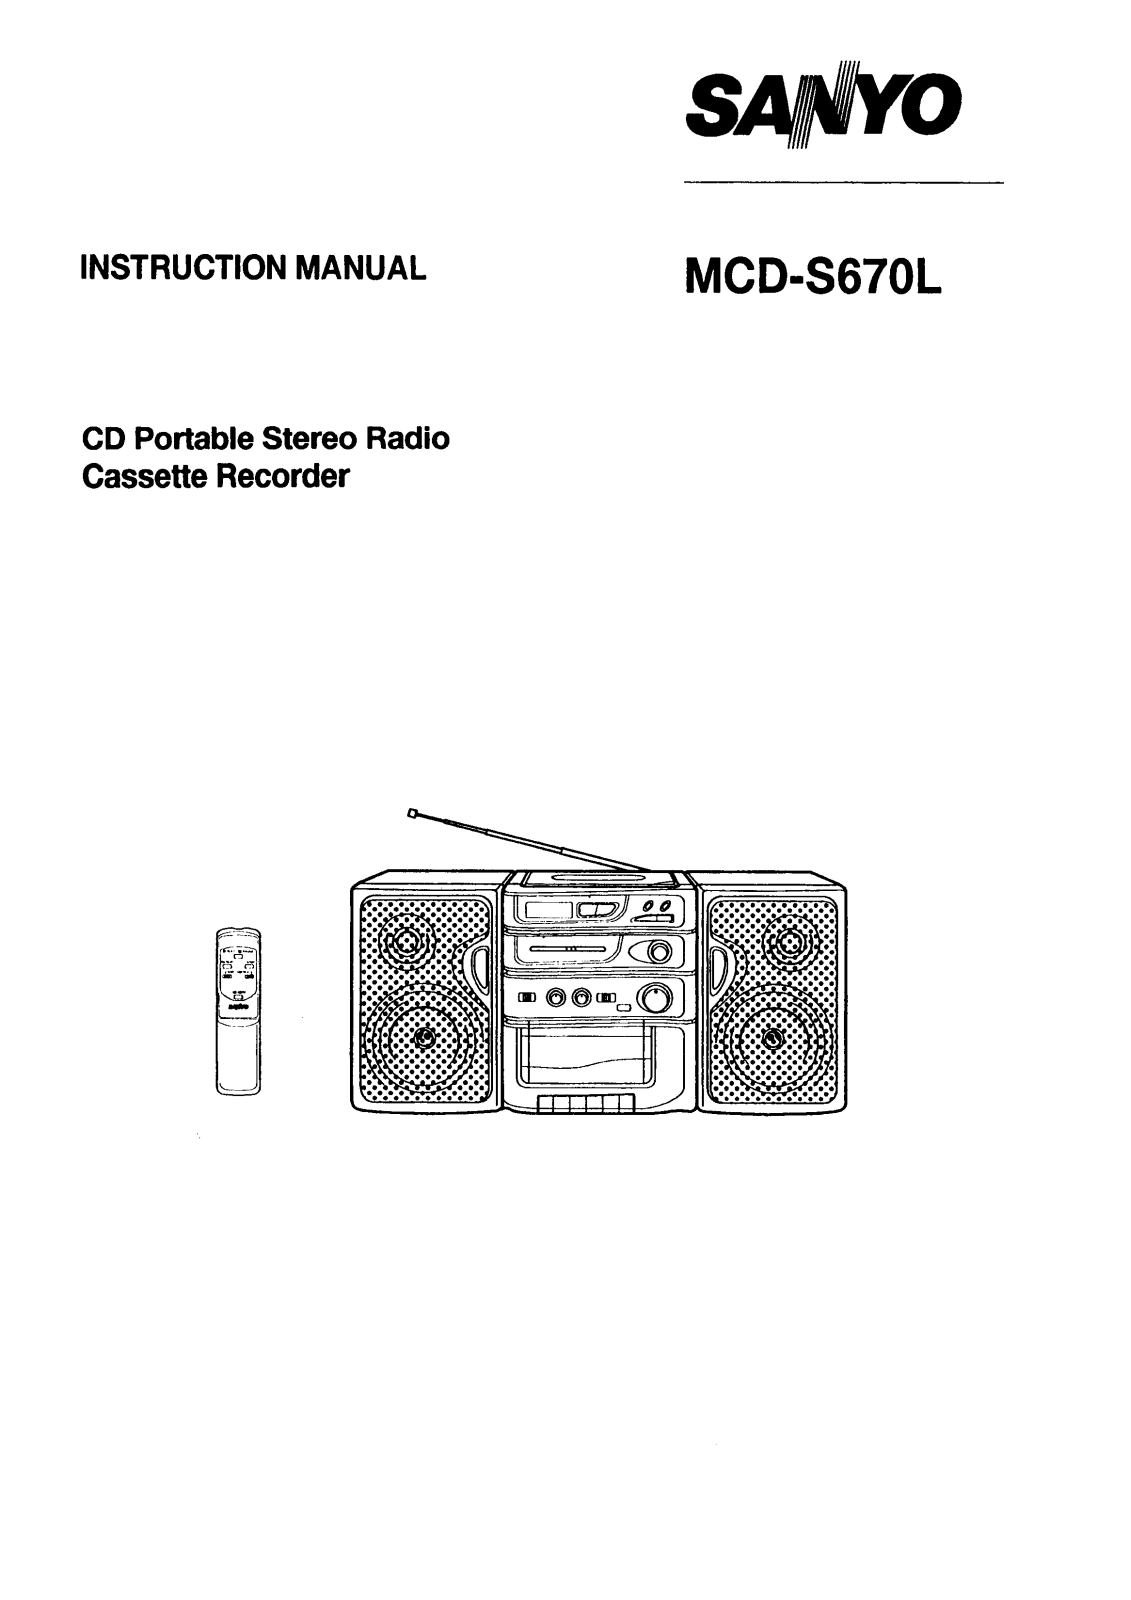 Sanyo MCD-S670L Instruction Manual